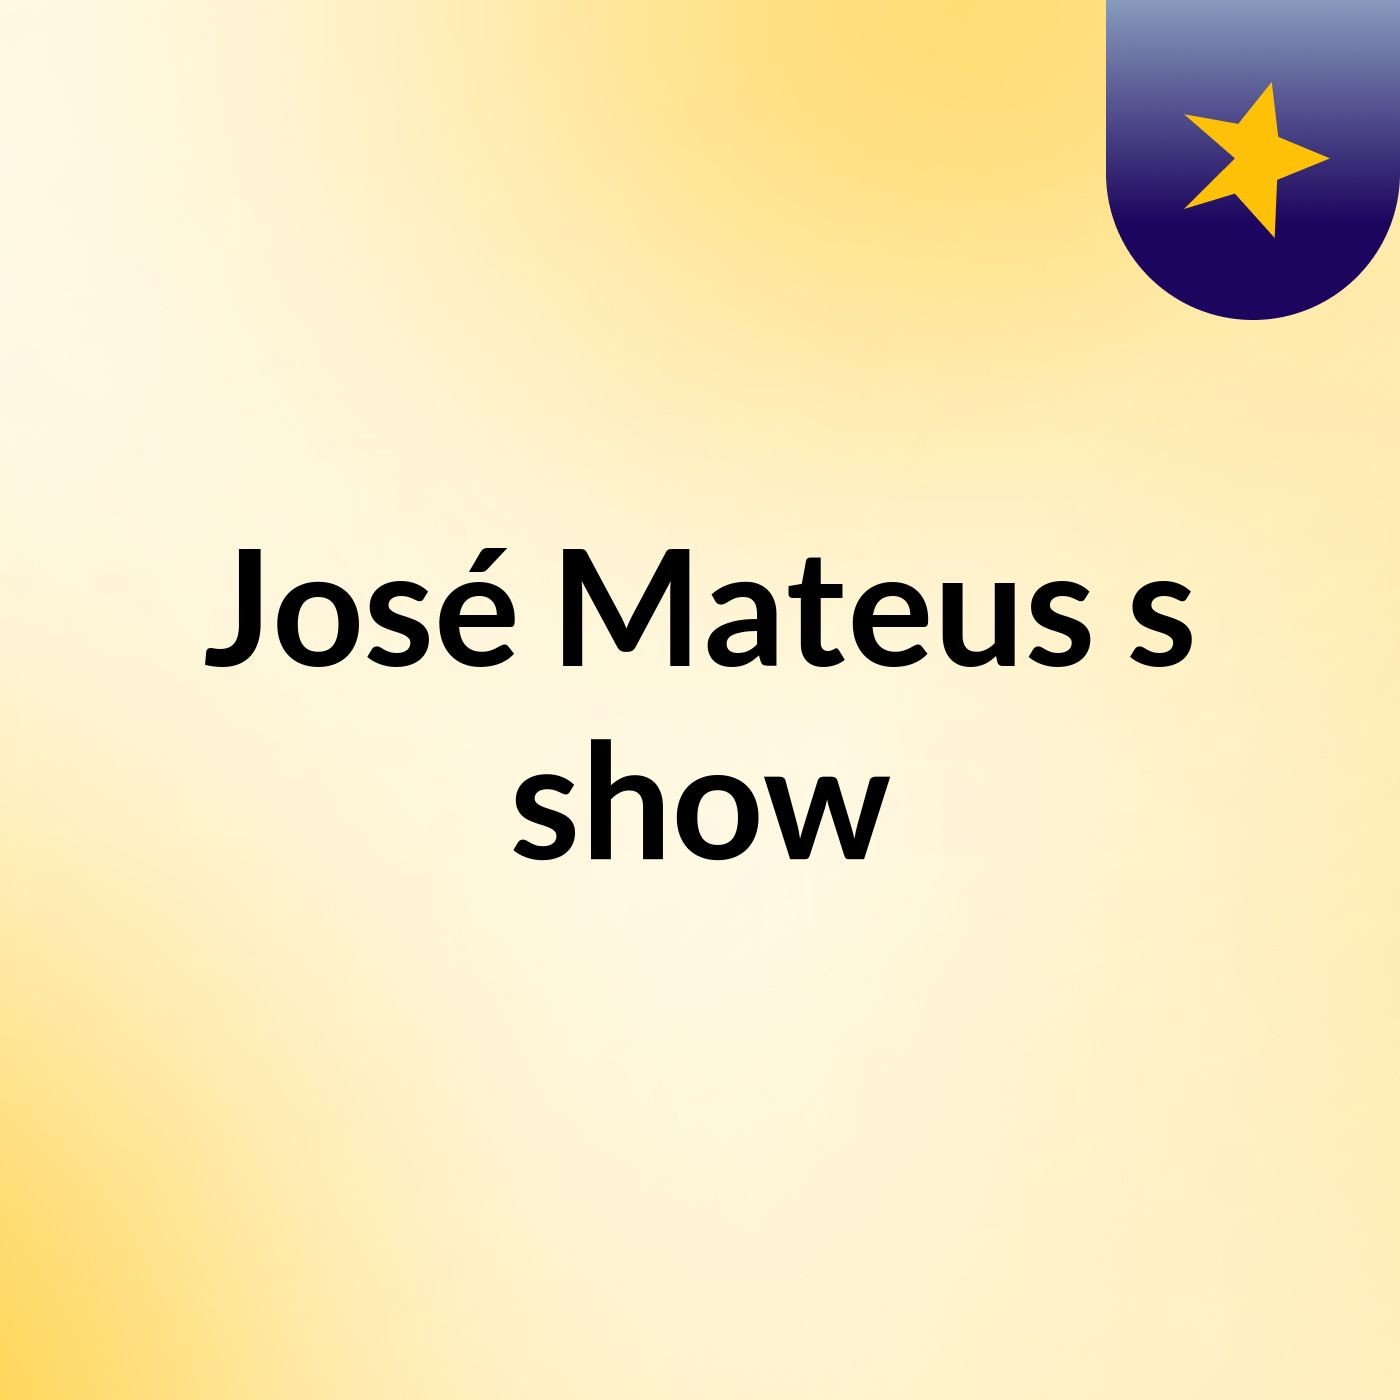 José Mateus's show